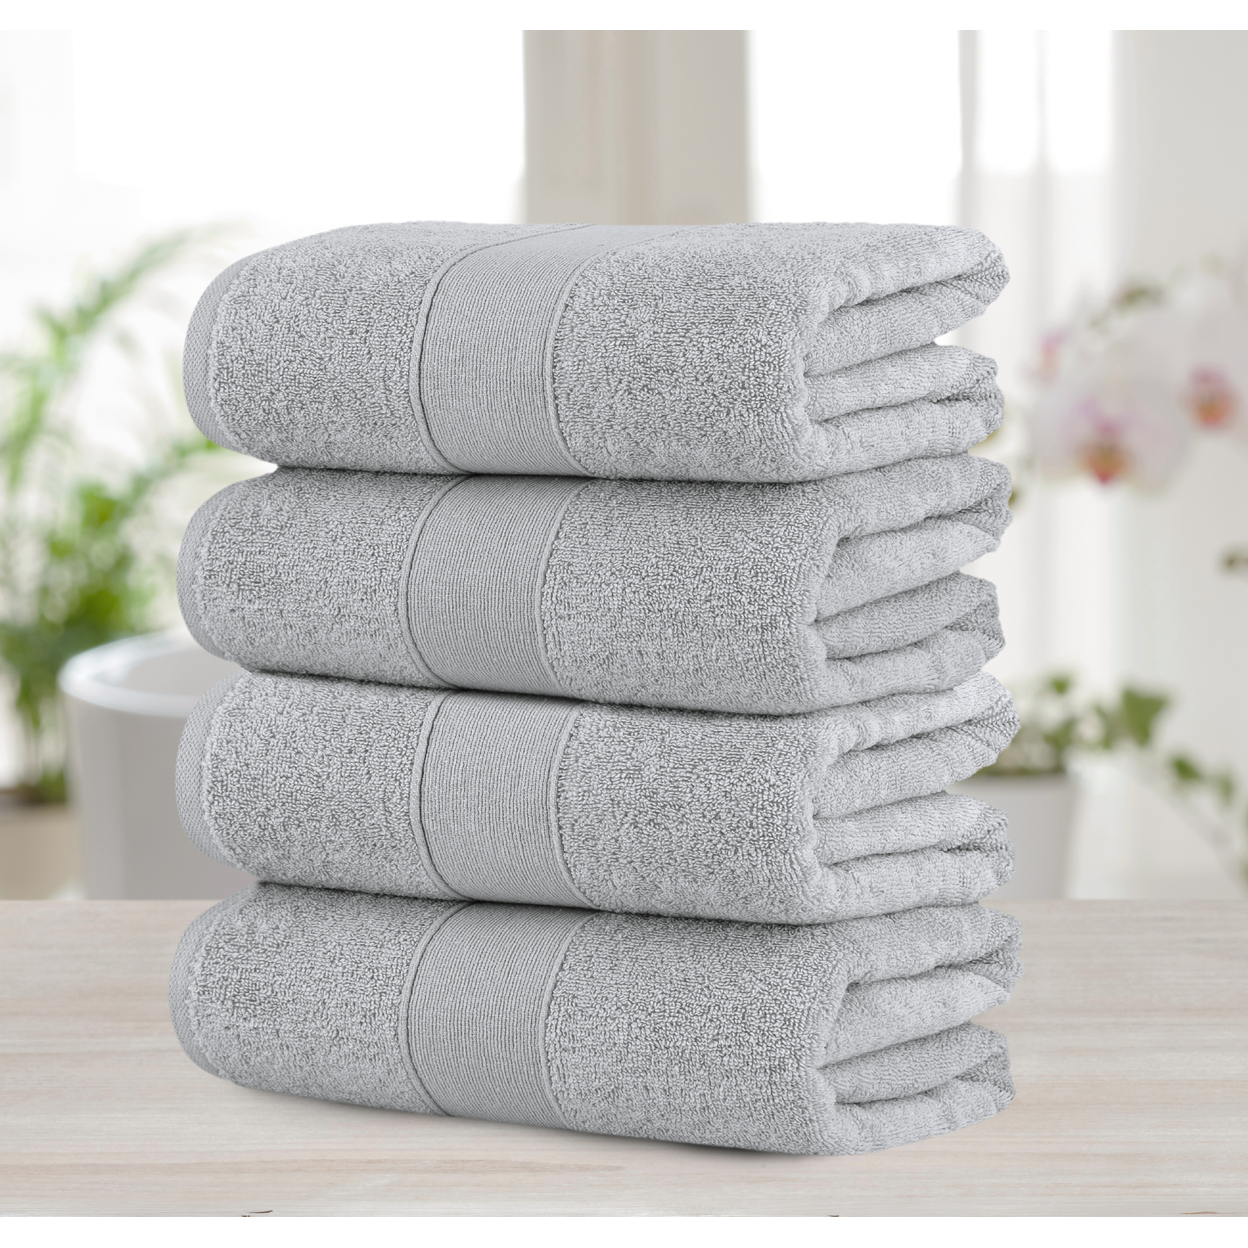 Chic Home Luxurious 4-Piece 100% Pure Turkish Cotton Bath Towels, 30 X 54, Dobby Border Design, OEKO-TEX Certified Set - Grey